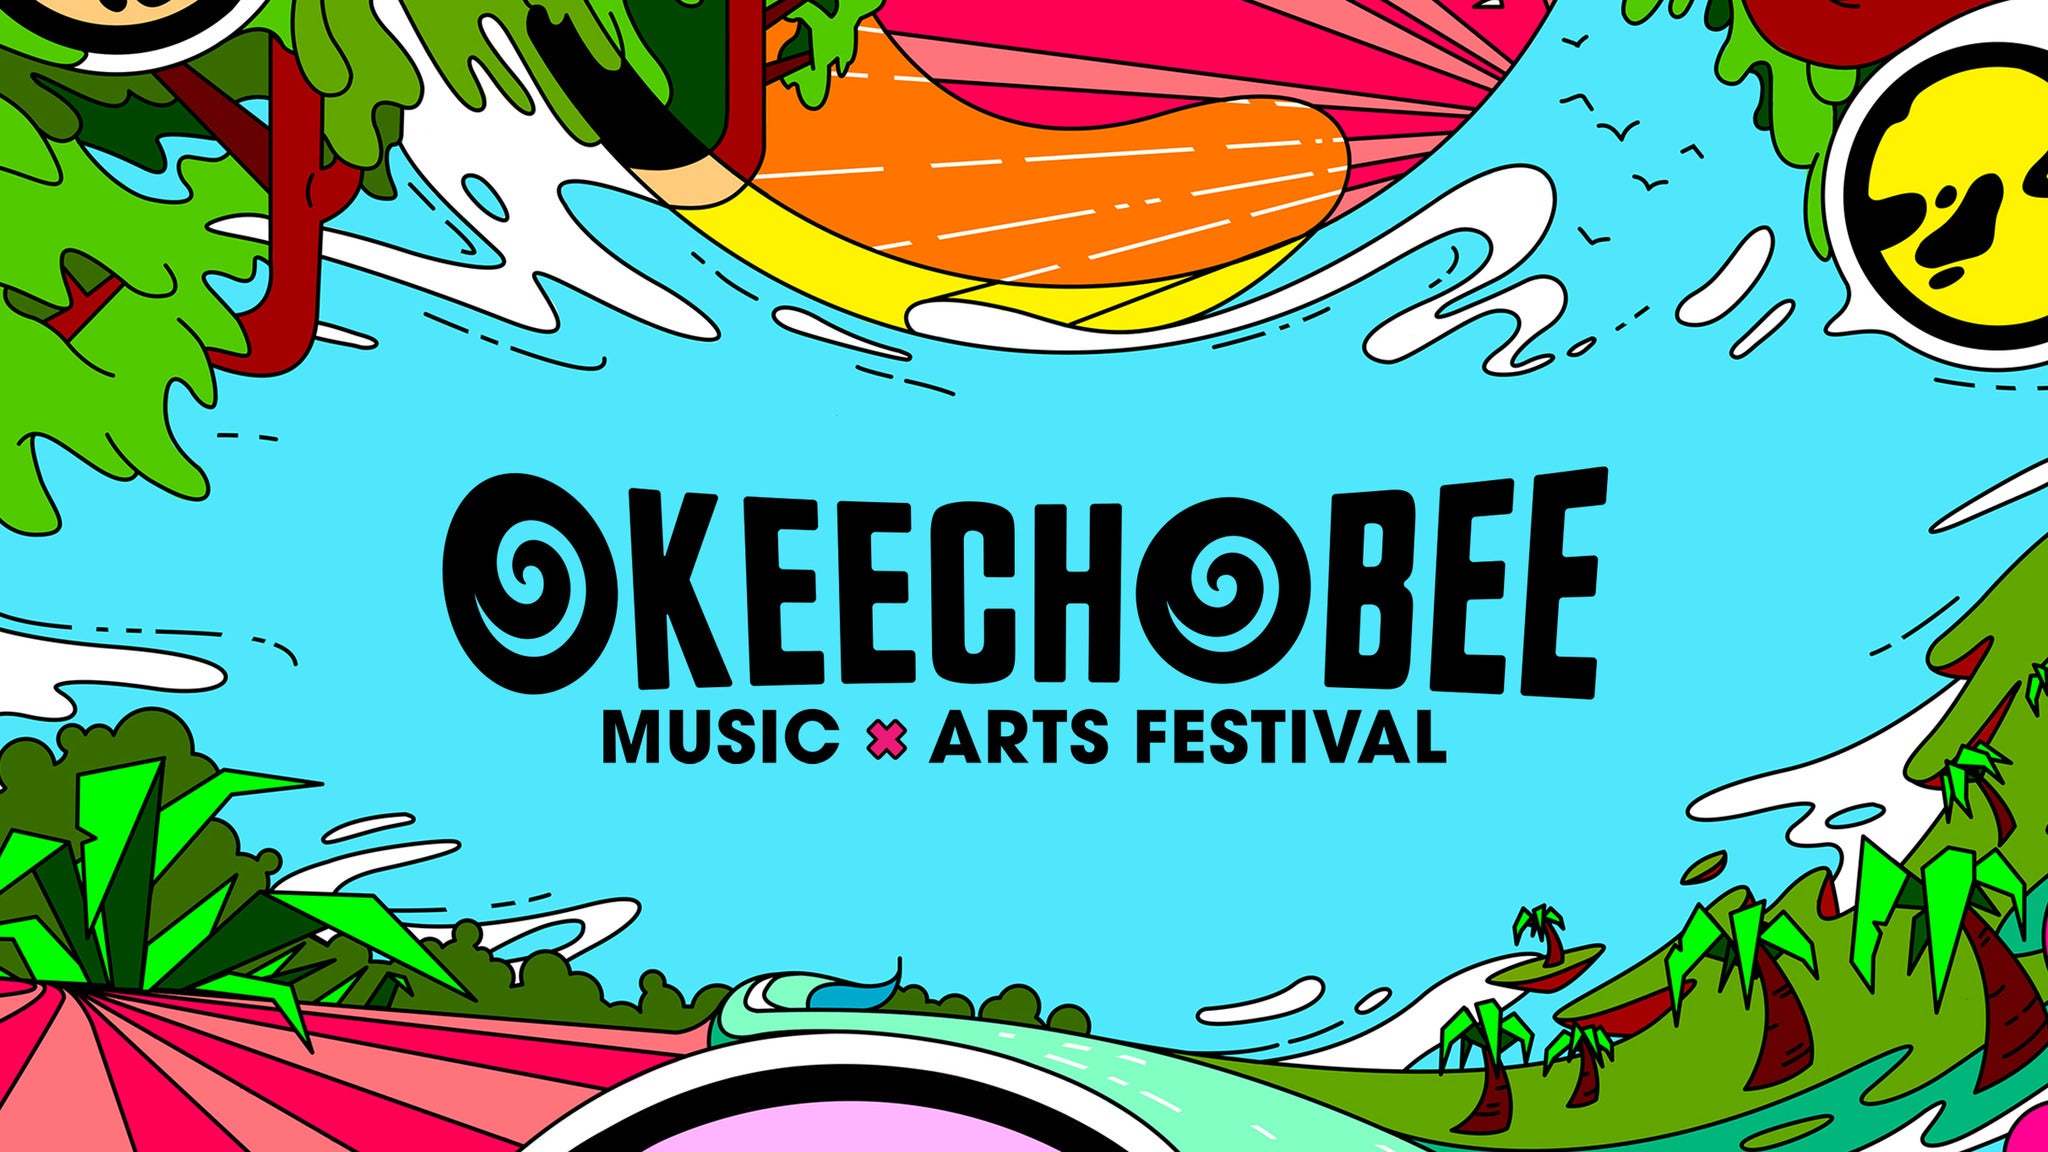 Okeechobee Music & Arts Festival Tickets, 2021 Concert Tour Dates